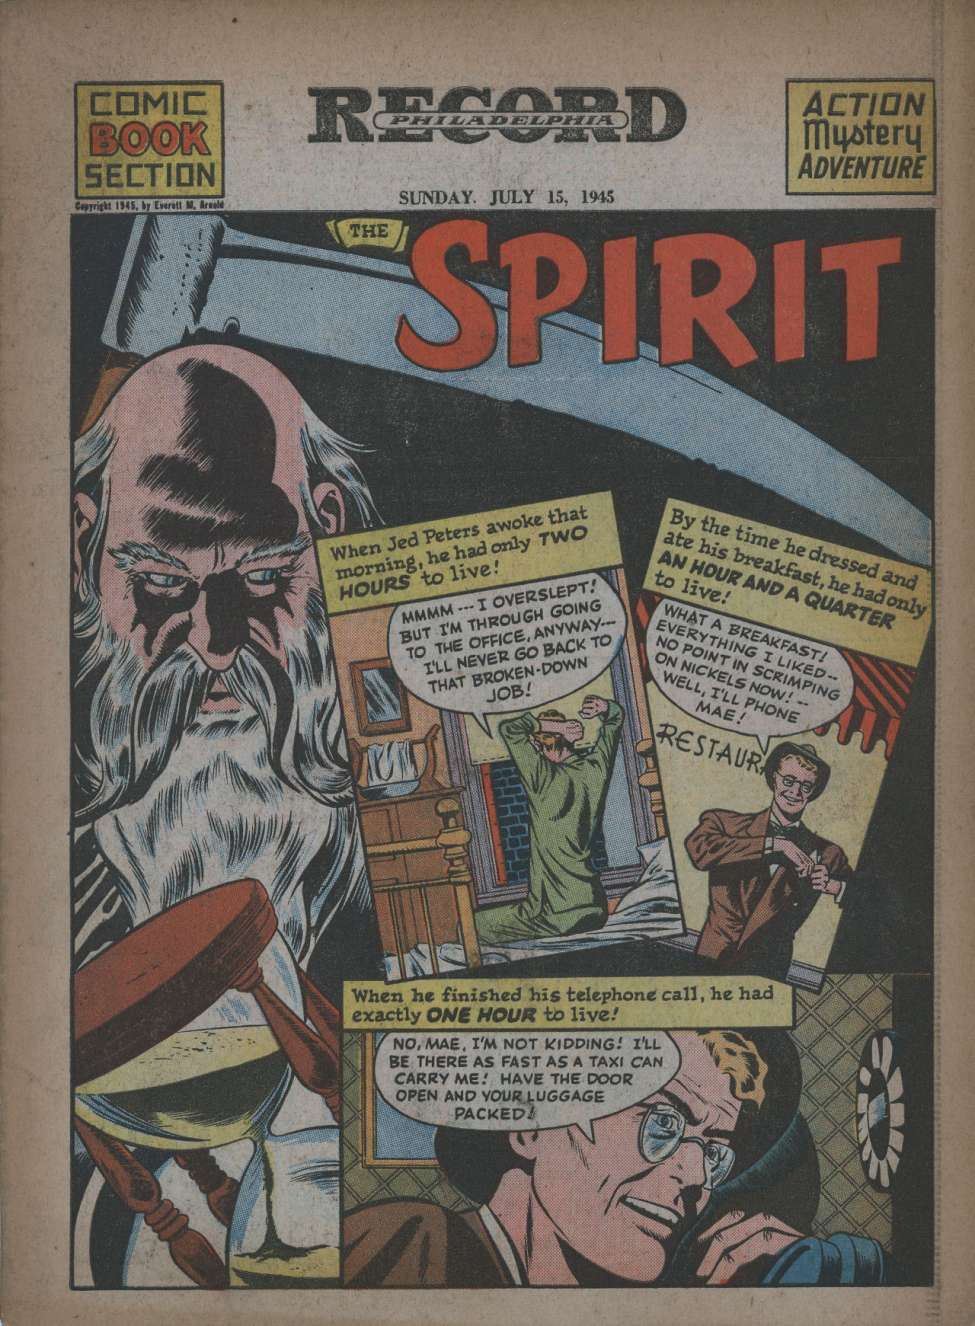 Comic Book Cover For The Spirit (1945-07-15) - Philadelphia Record - Version 2